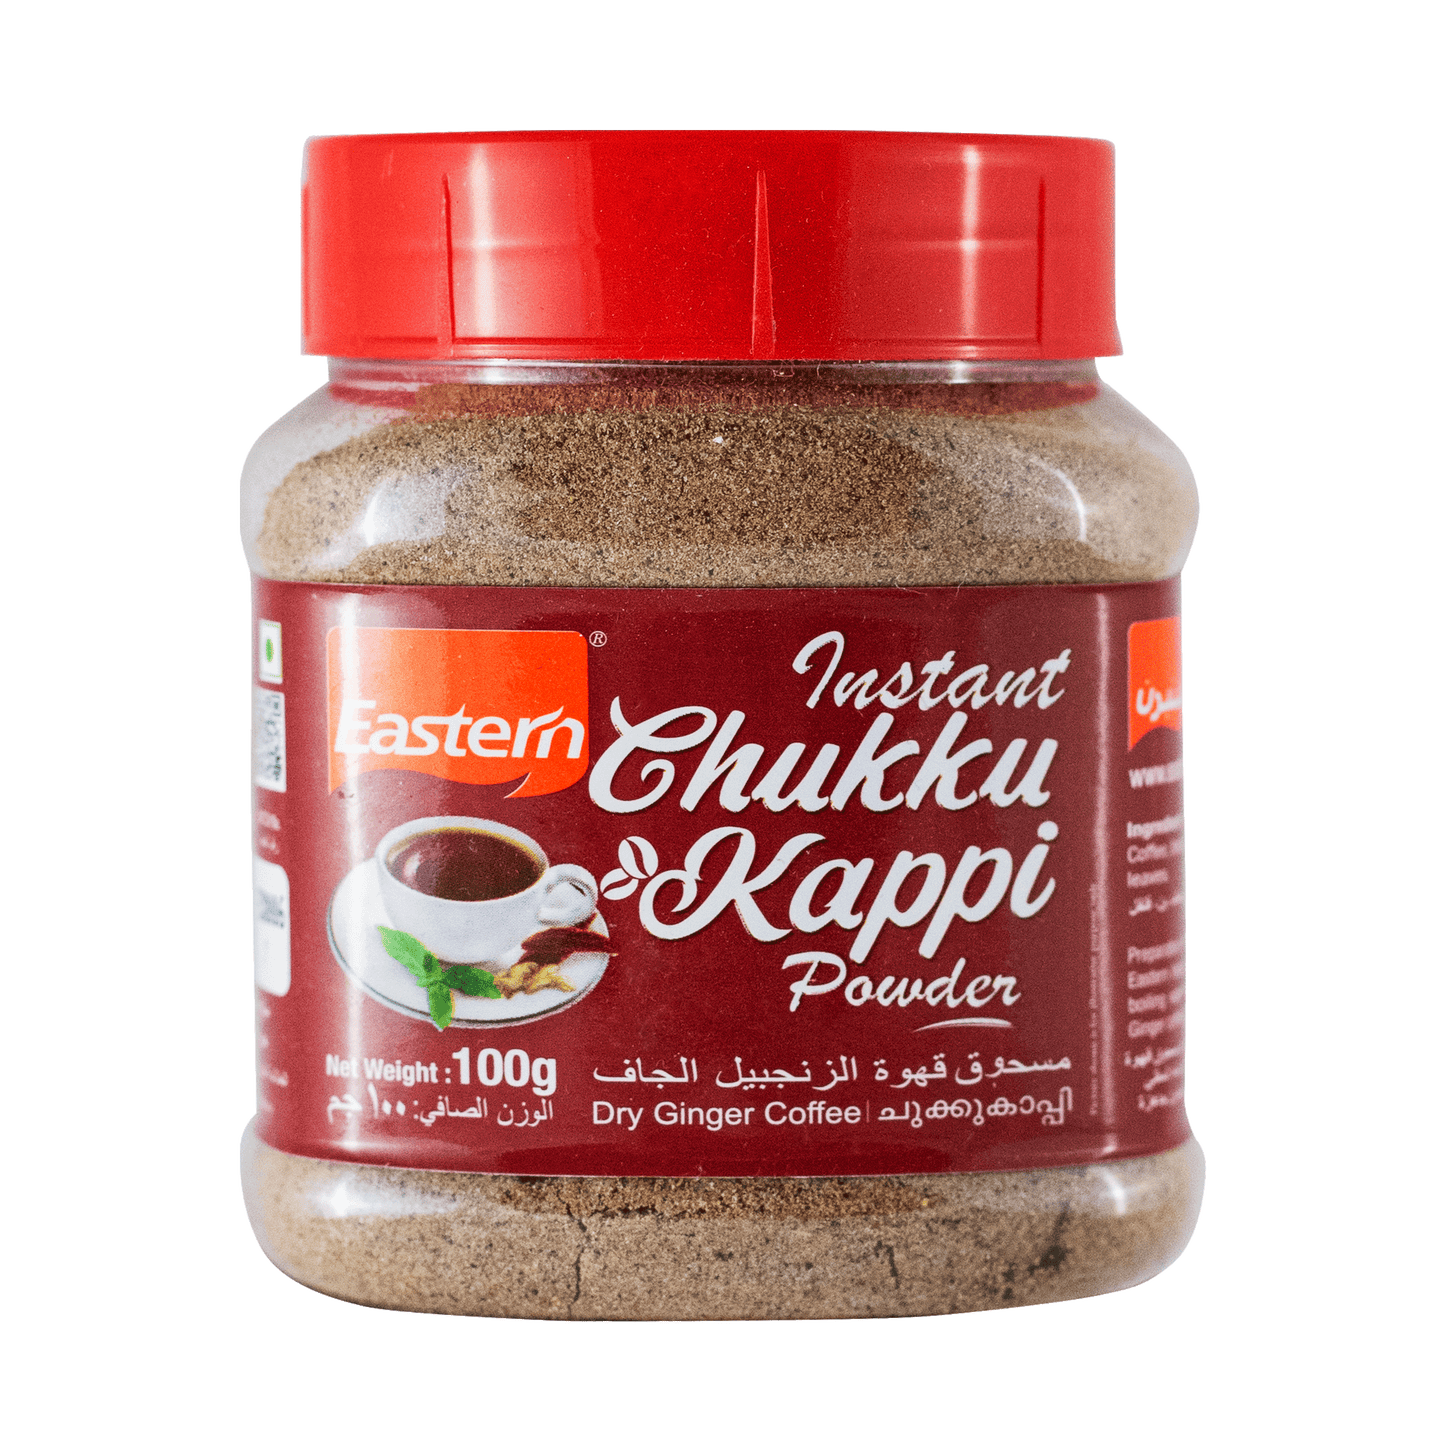 Eastern Instant Chukku Kappi Dry Ginger Coffee 100g